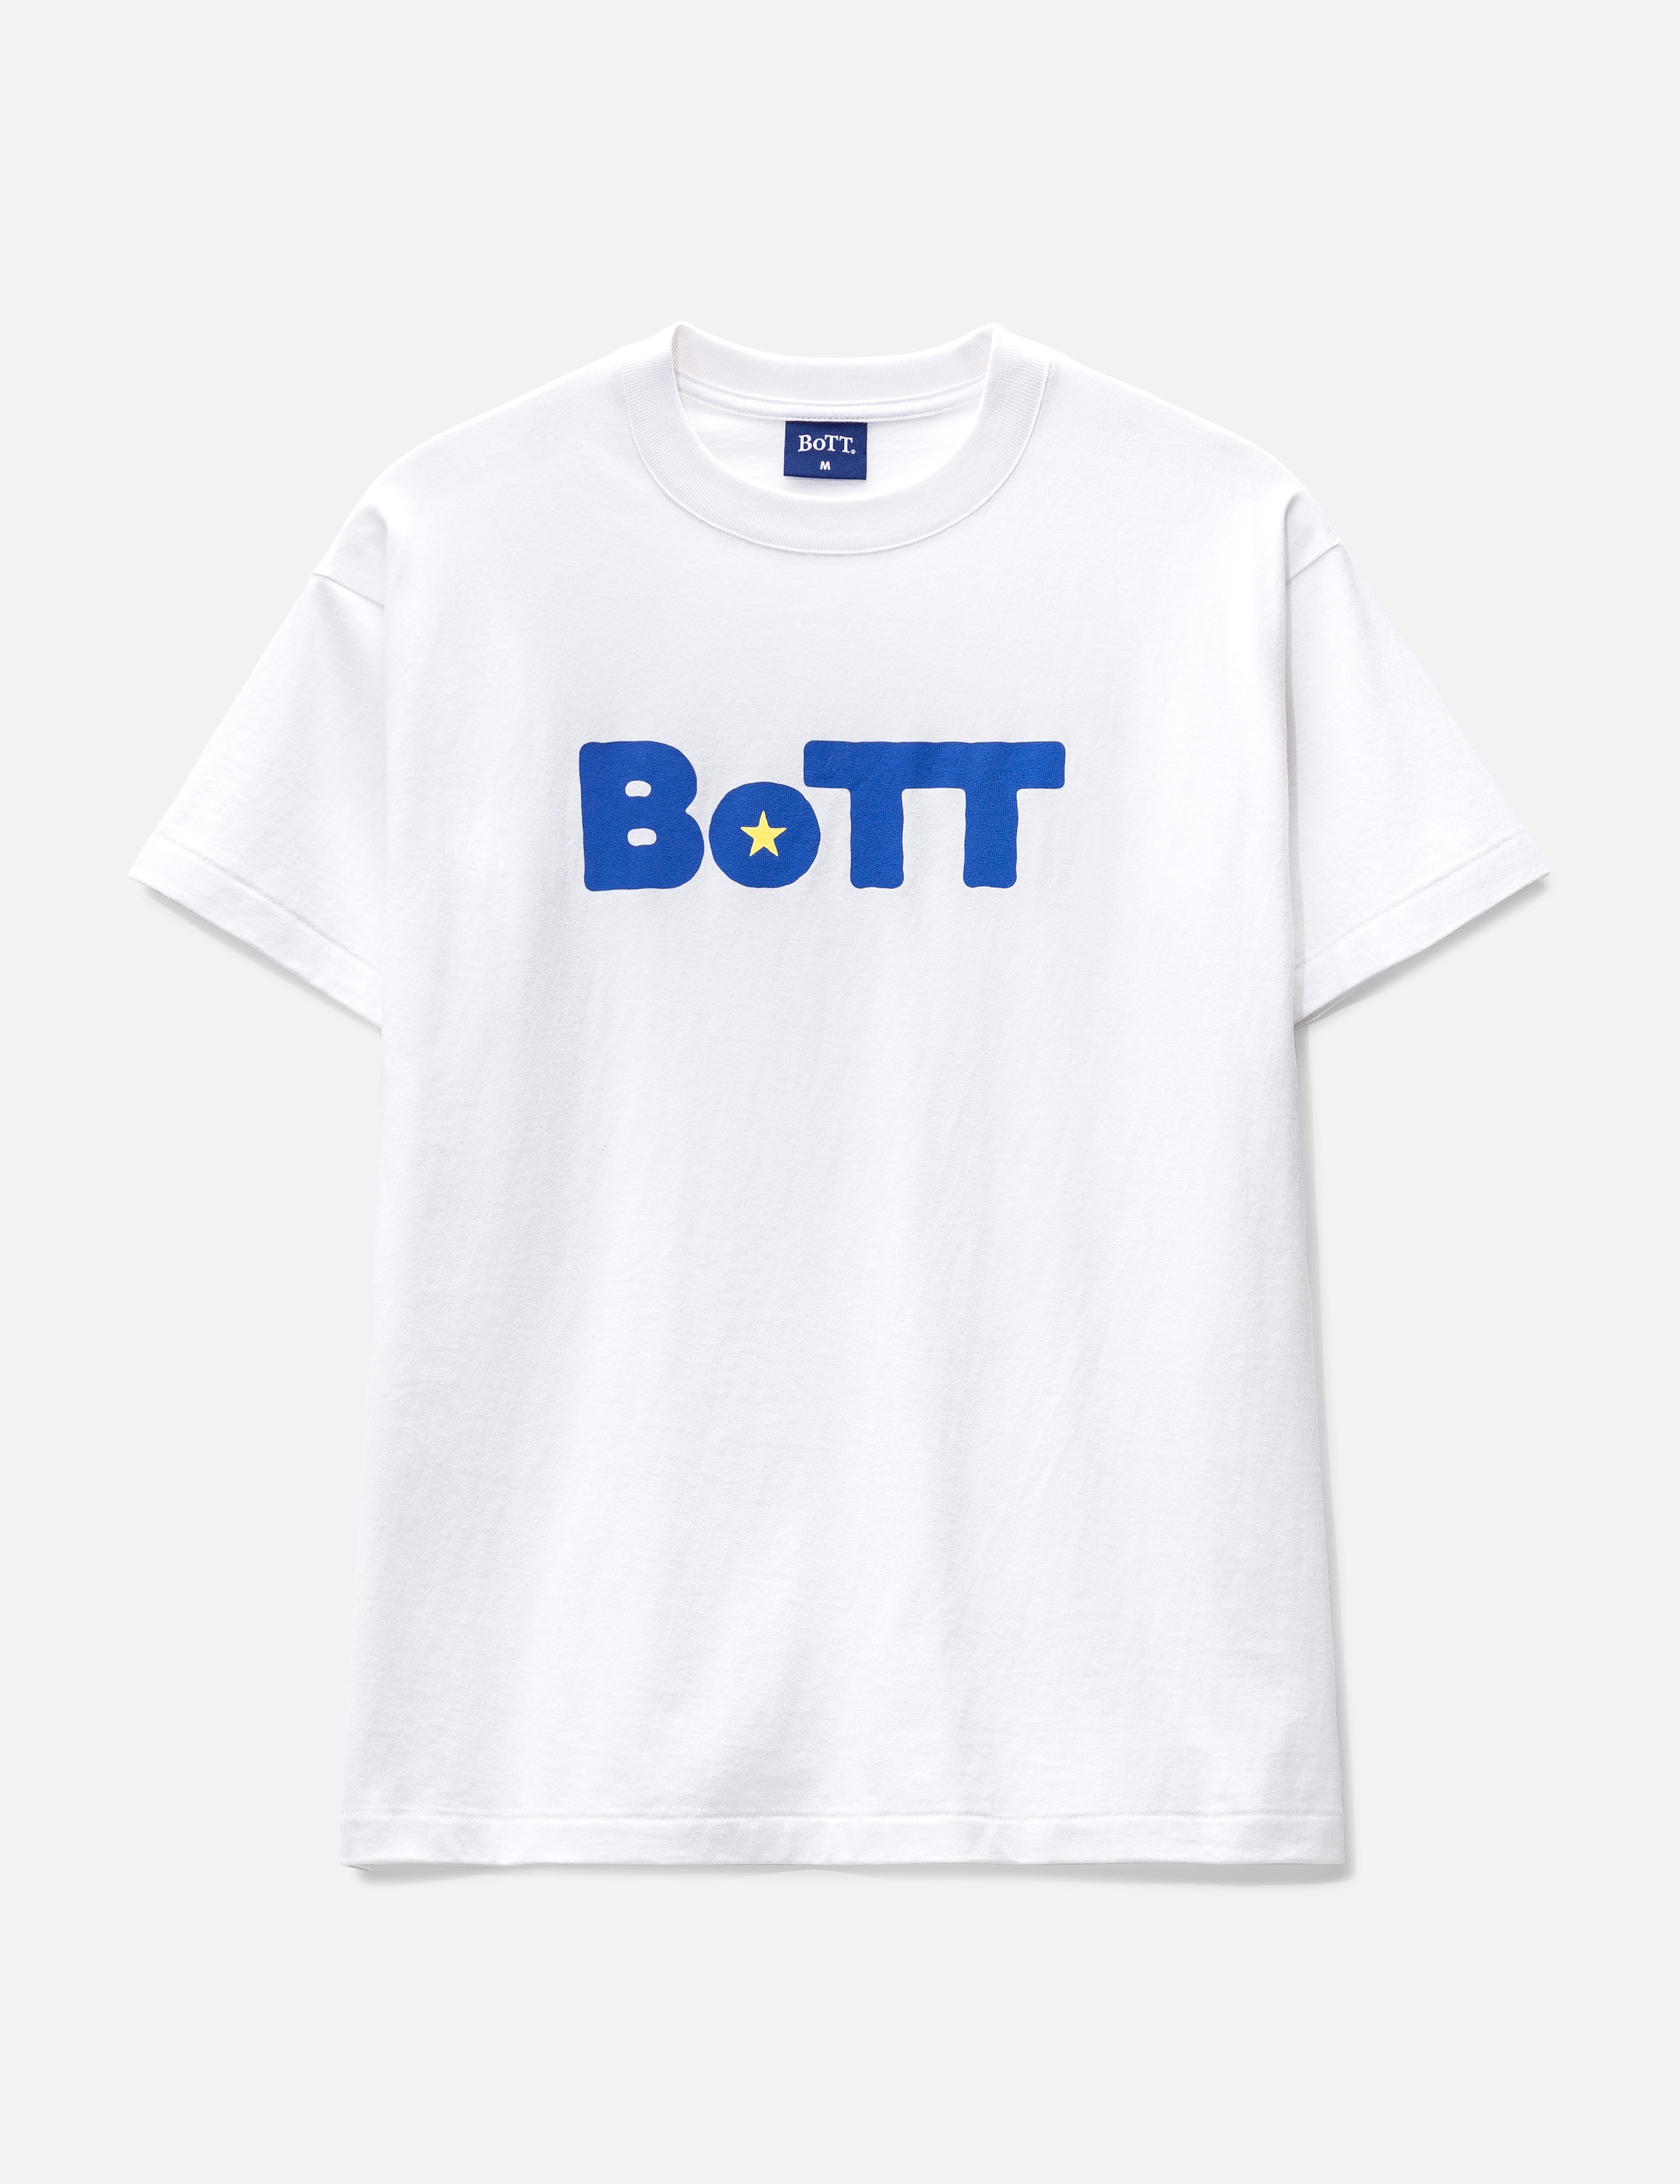 BoTT - スター ロゴ Tシャツ | HBX - ハイプビースト(Hypebeast)が ...